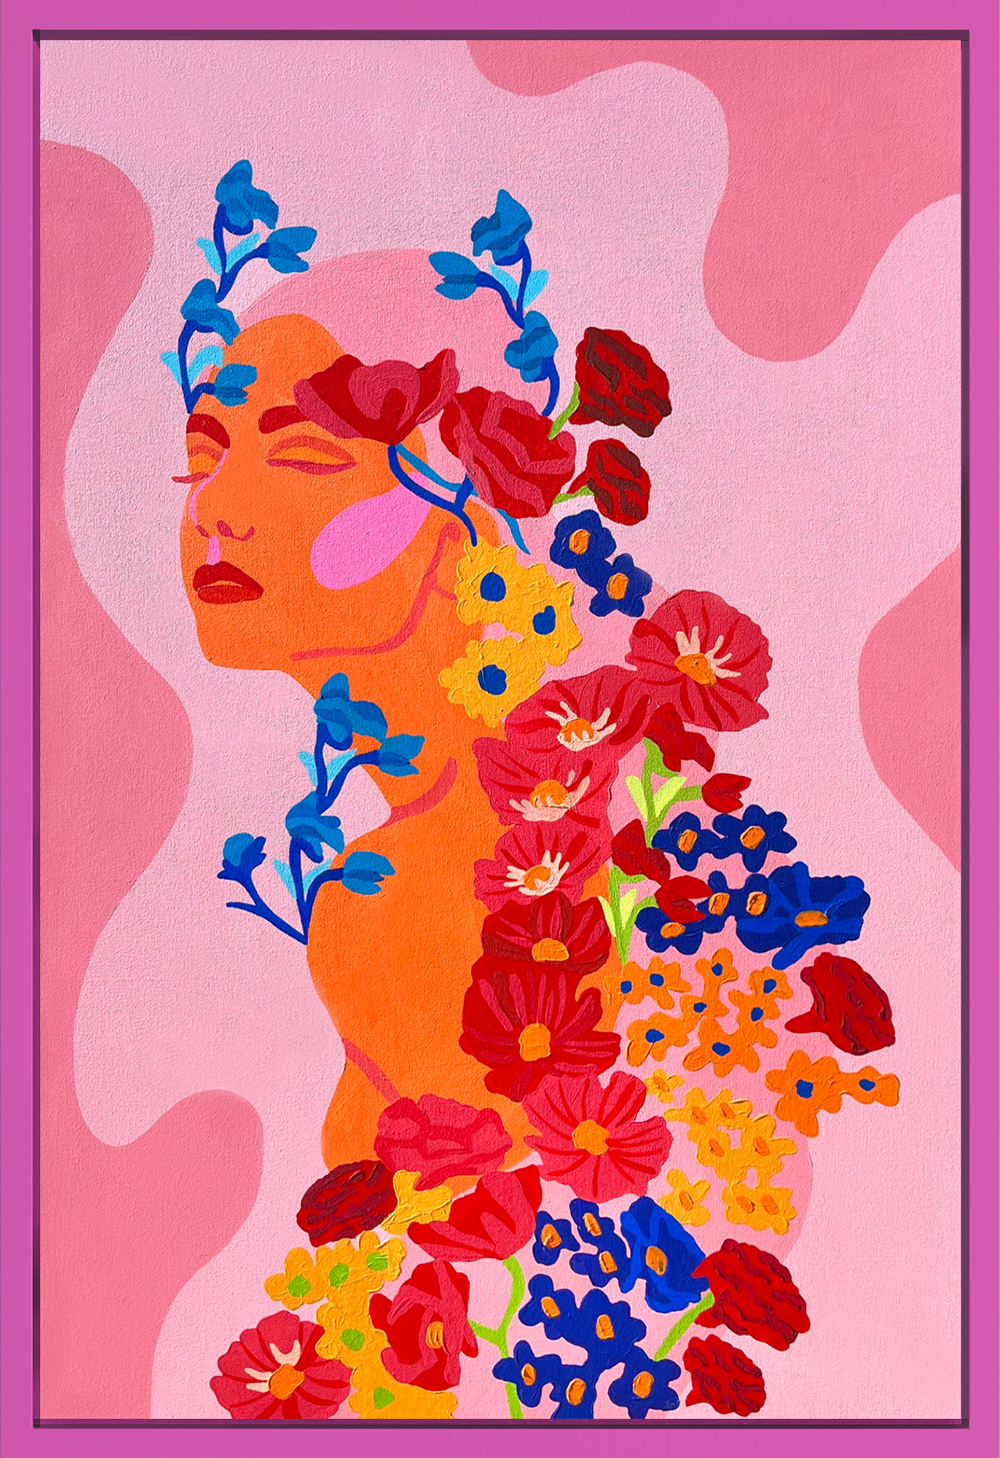 In Bloom Agate Rubene Painting Hip Hip Hooray Exhibition